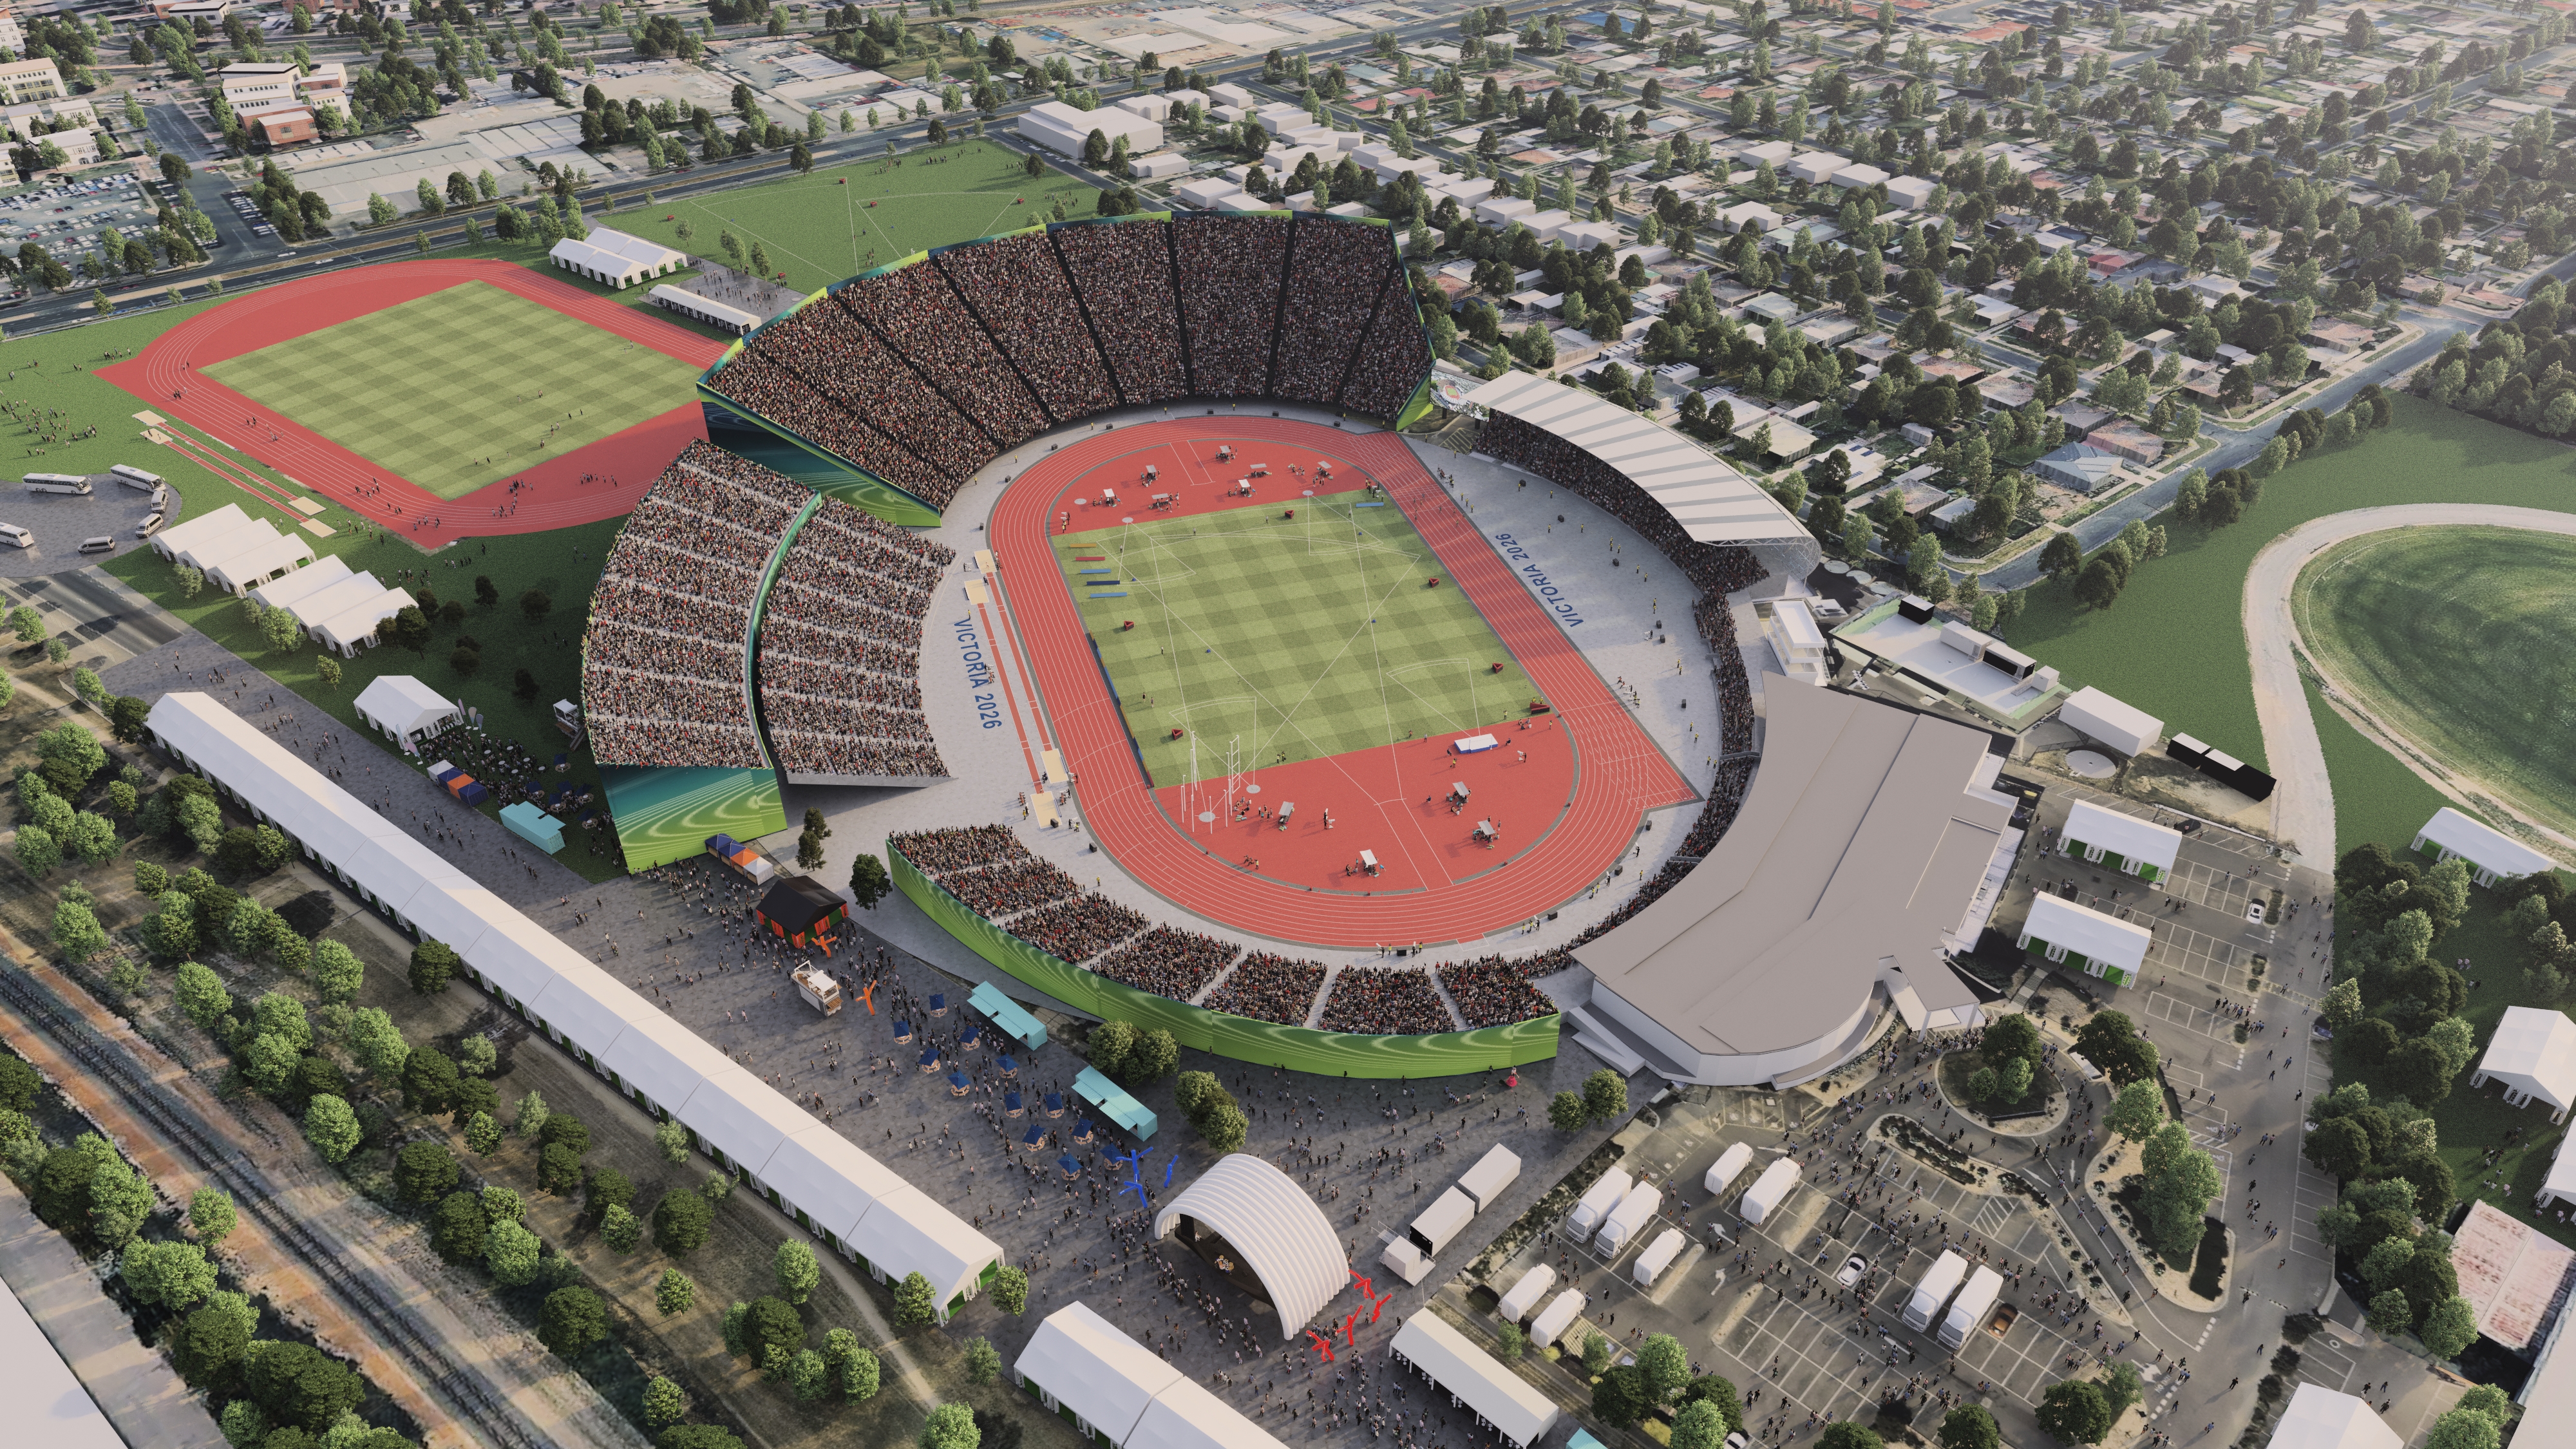 An artist's impression of the Victoria 2026 Athletics Venue at Ballarat's Eureka Stadium during Games time